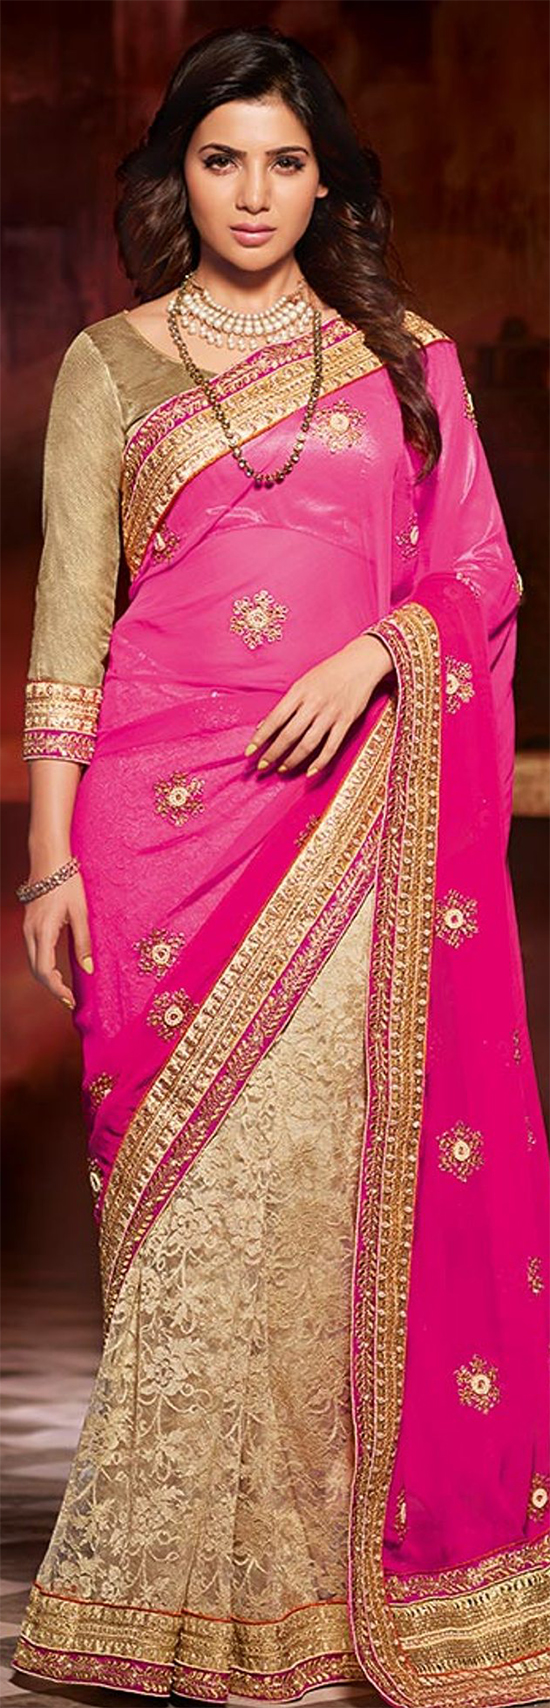 Samantha In Pink And Cream Saree